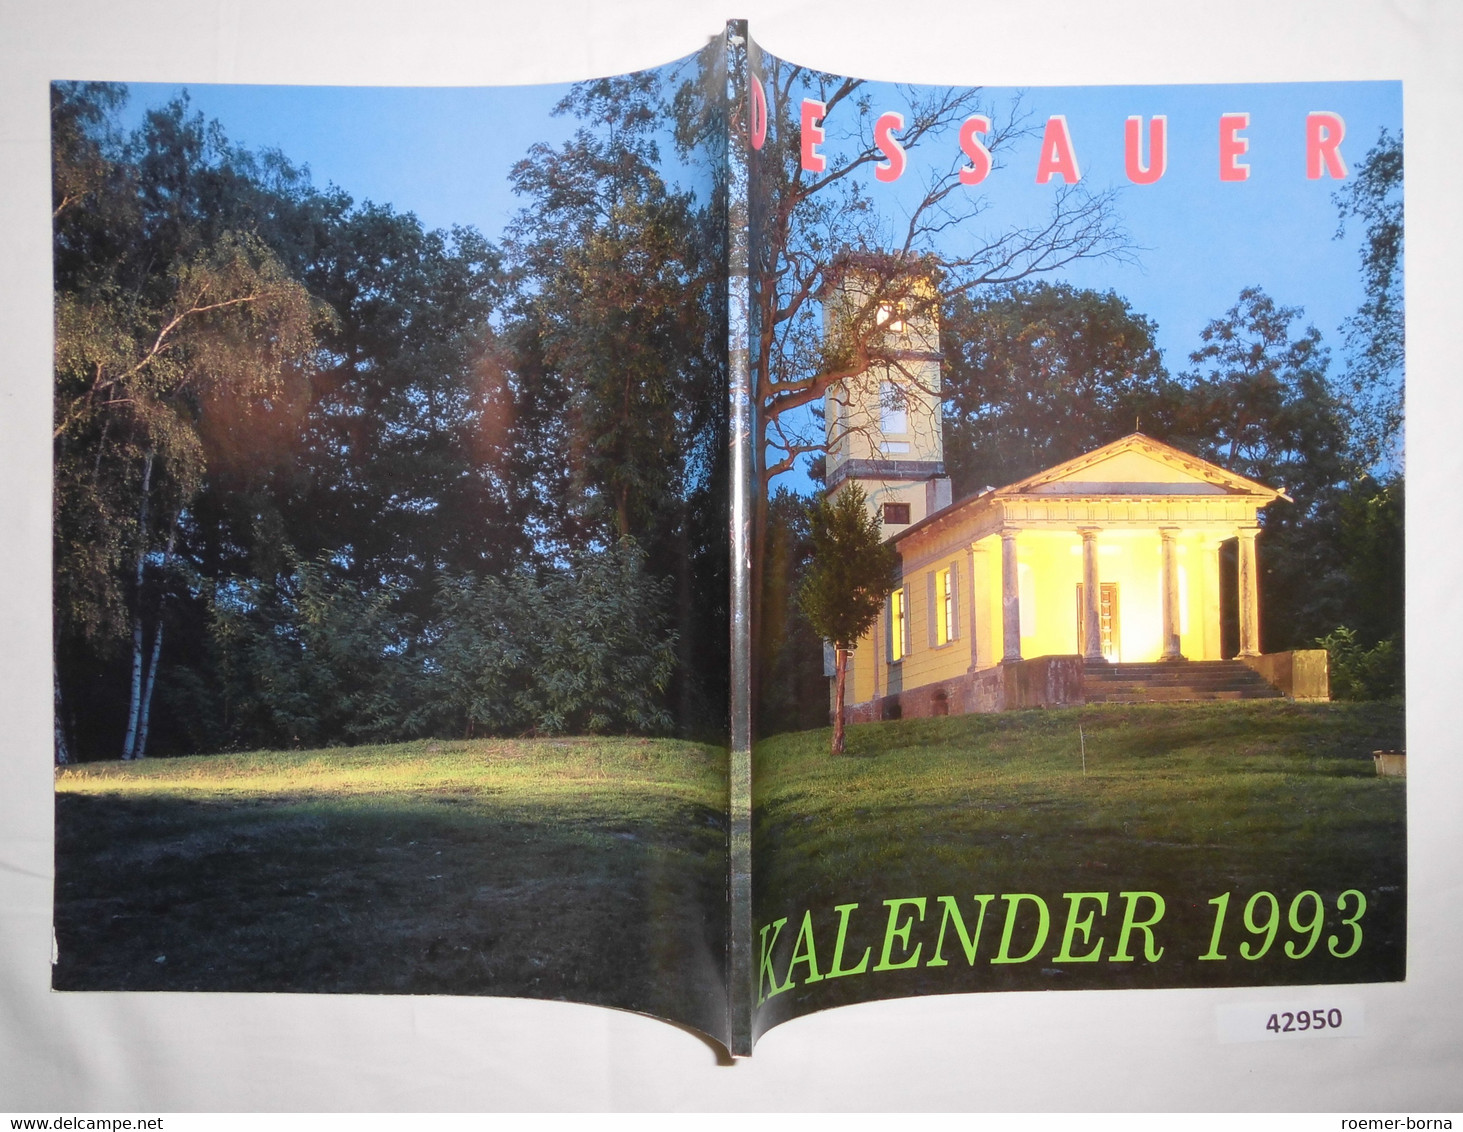 Dessauer Kalender 1993 (37. Jahrgang) - Calendari